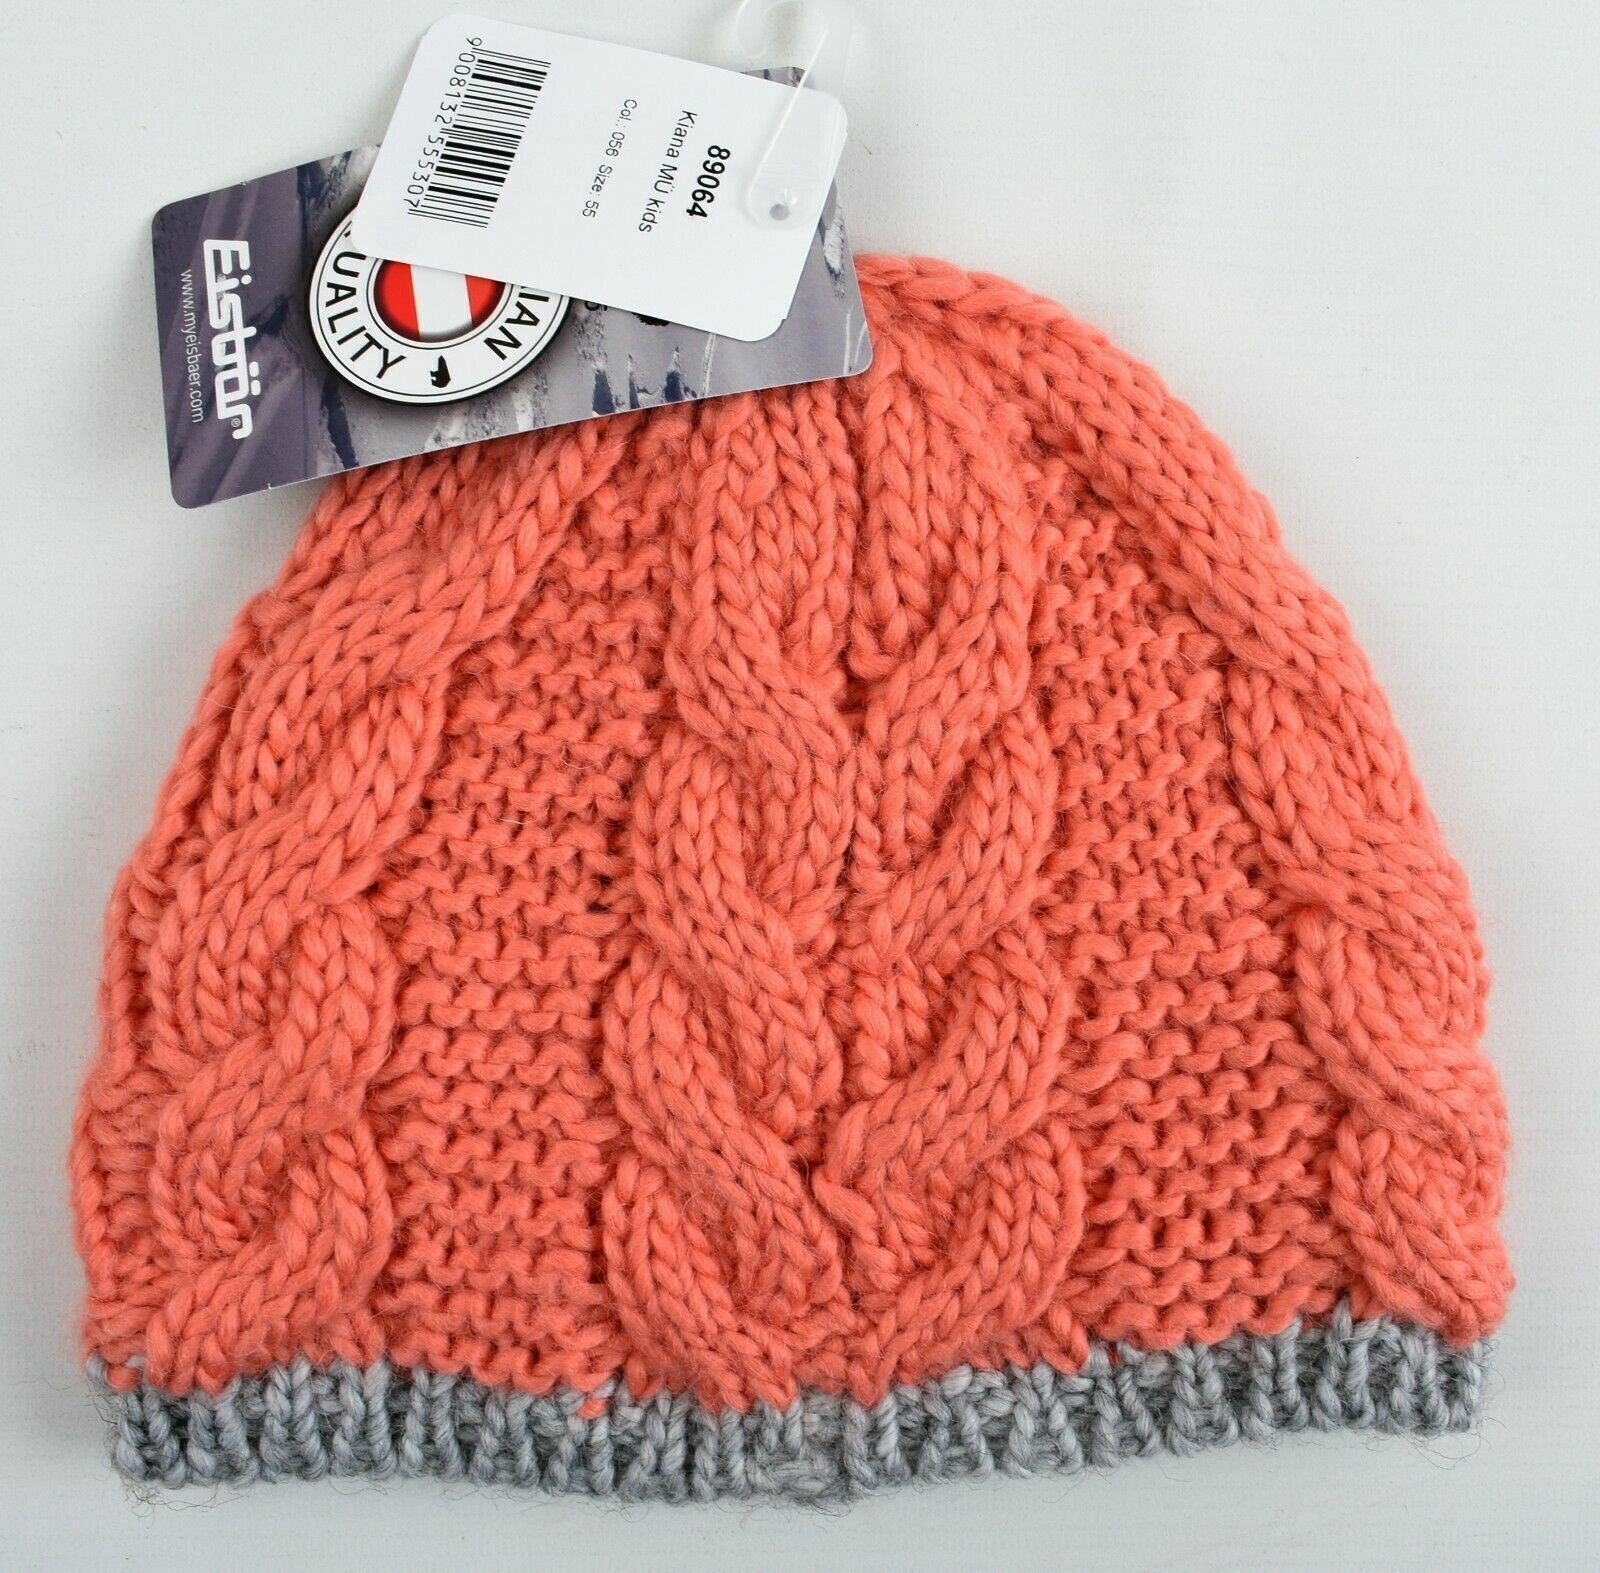 EISBAR - KIANA Girls' Juniors' Wool Blend Beanie Hat, Coral/Grey, size 55